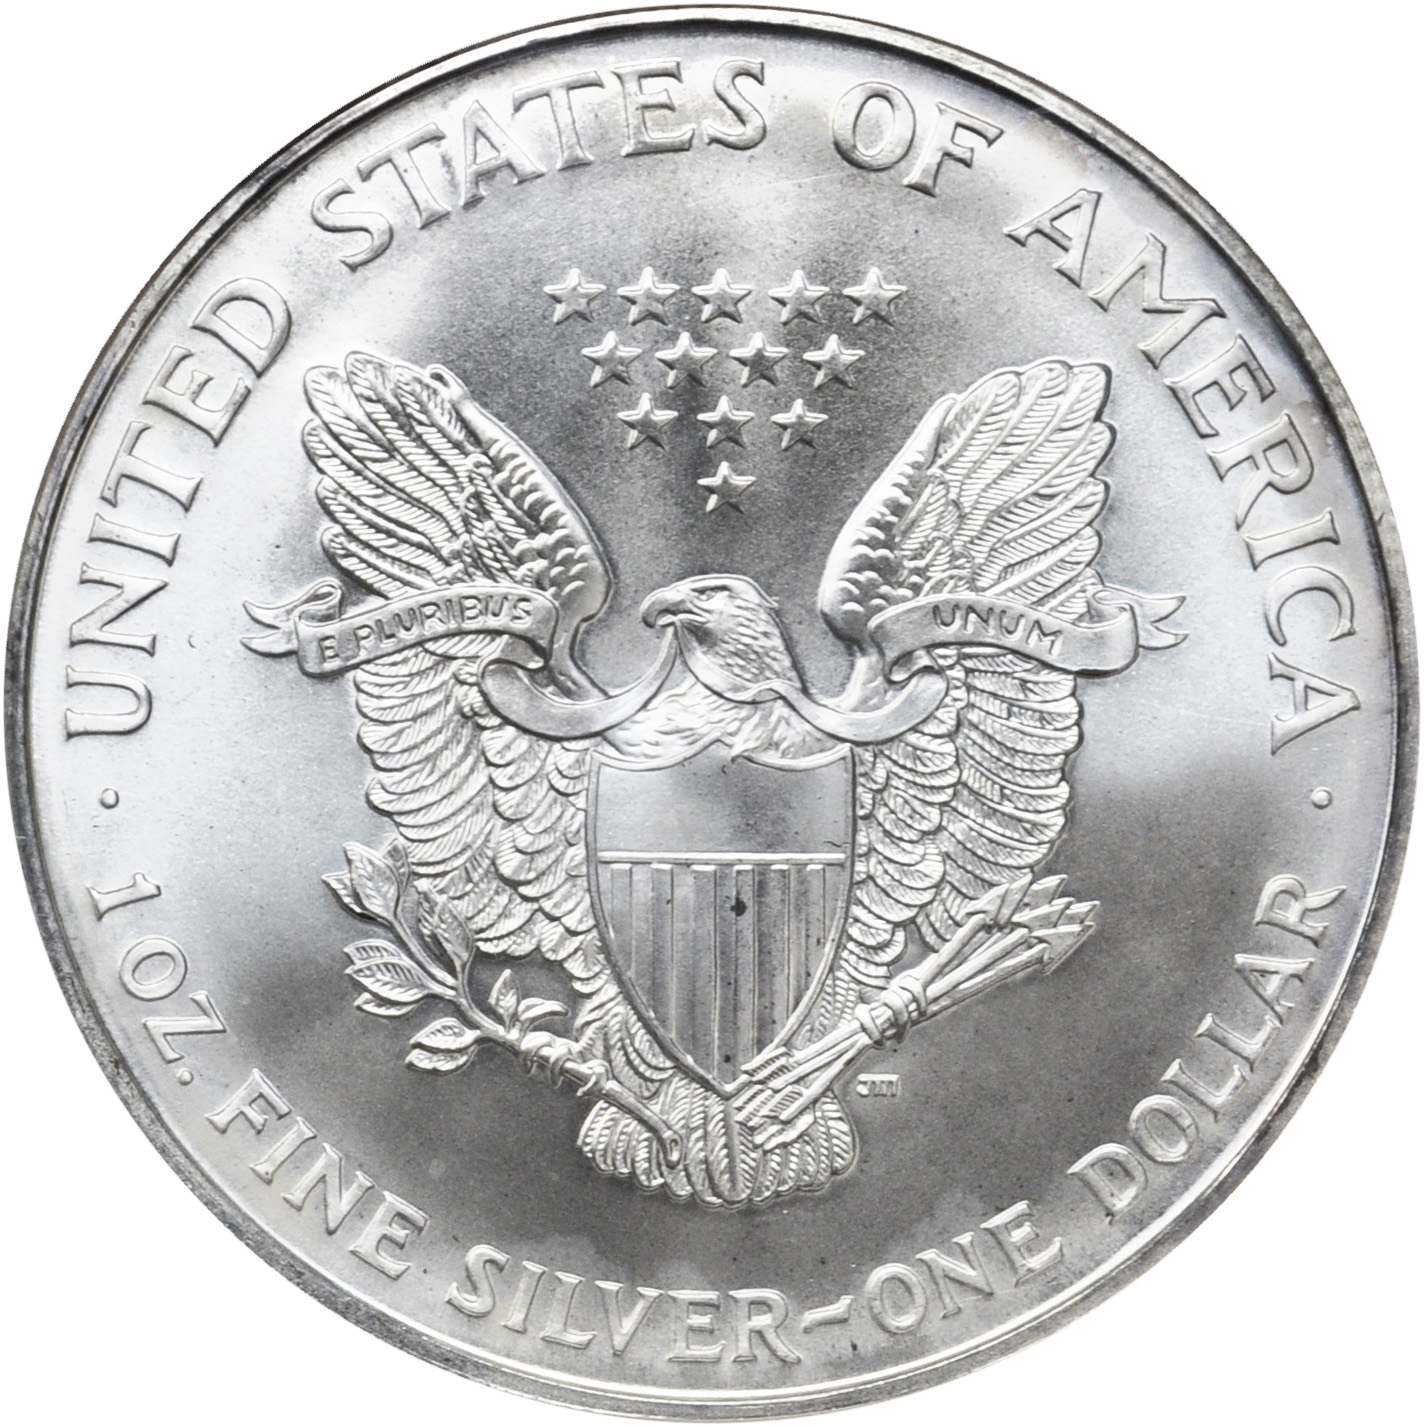 Value of 1994 $1 Silver Coin | American Silver Eagle Coin